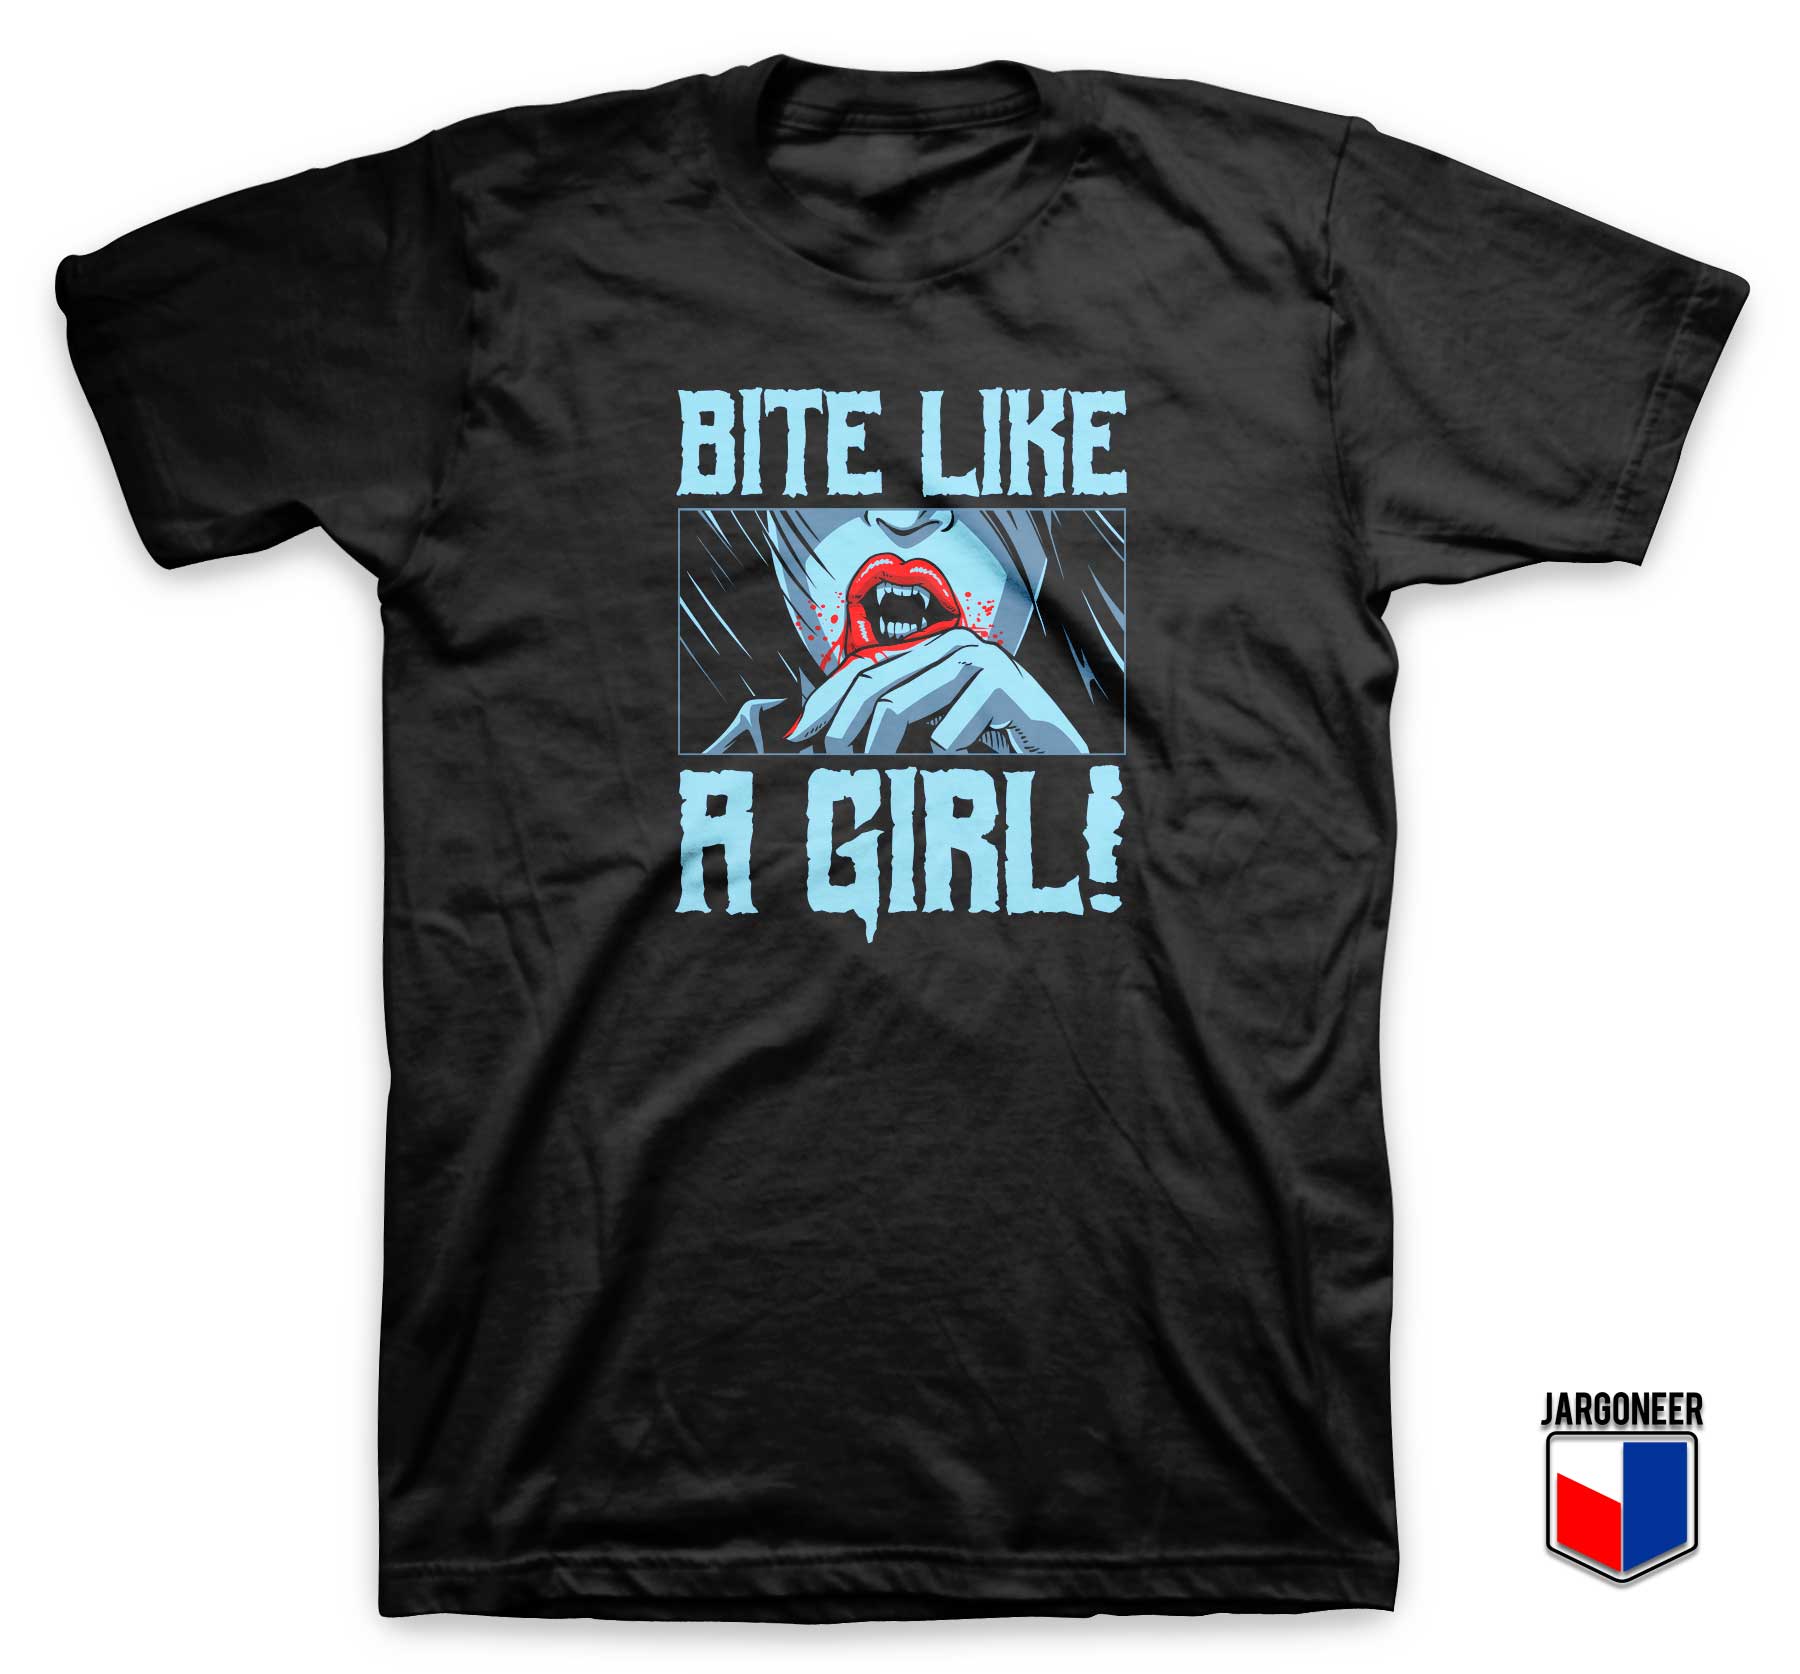 Bite Like A Girl T Shirt - Shop Unique Graphic Cool Shirt Designs